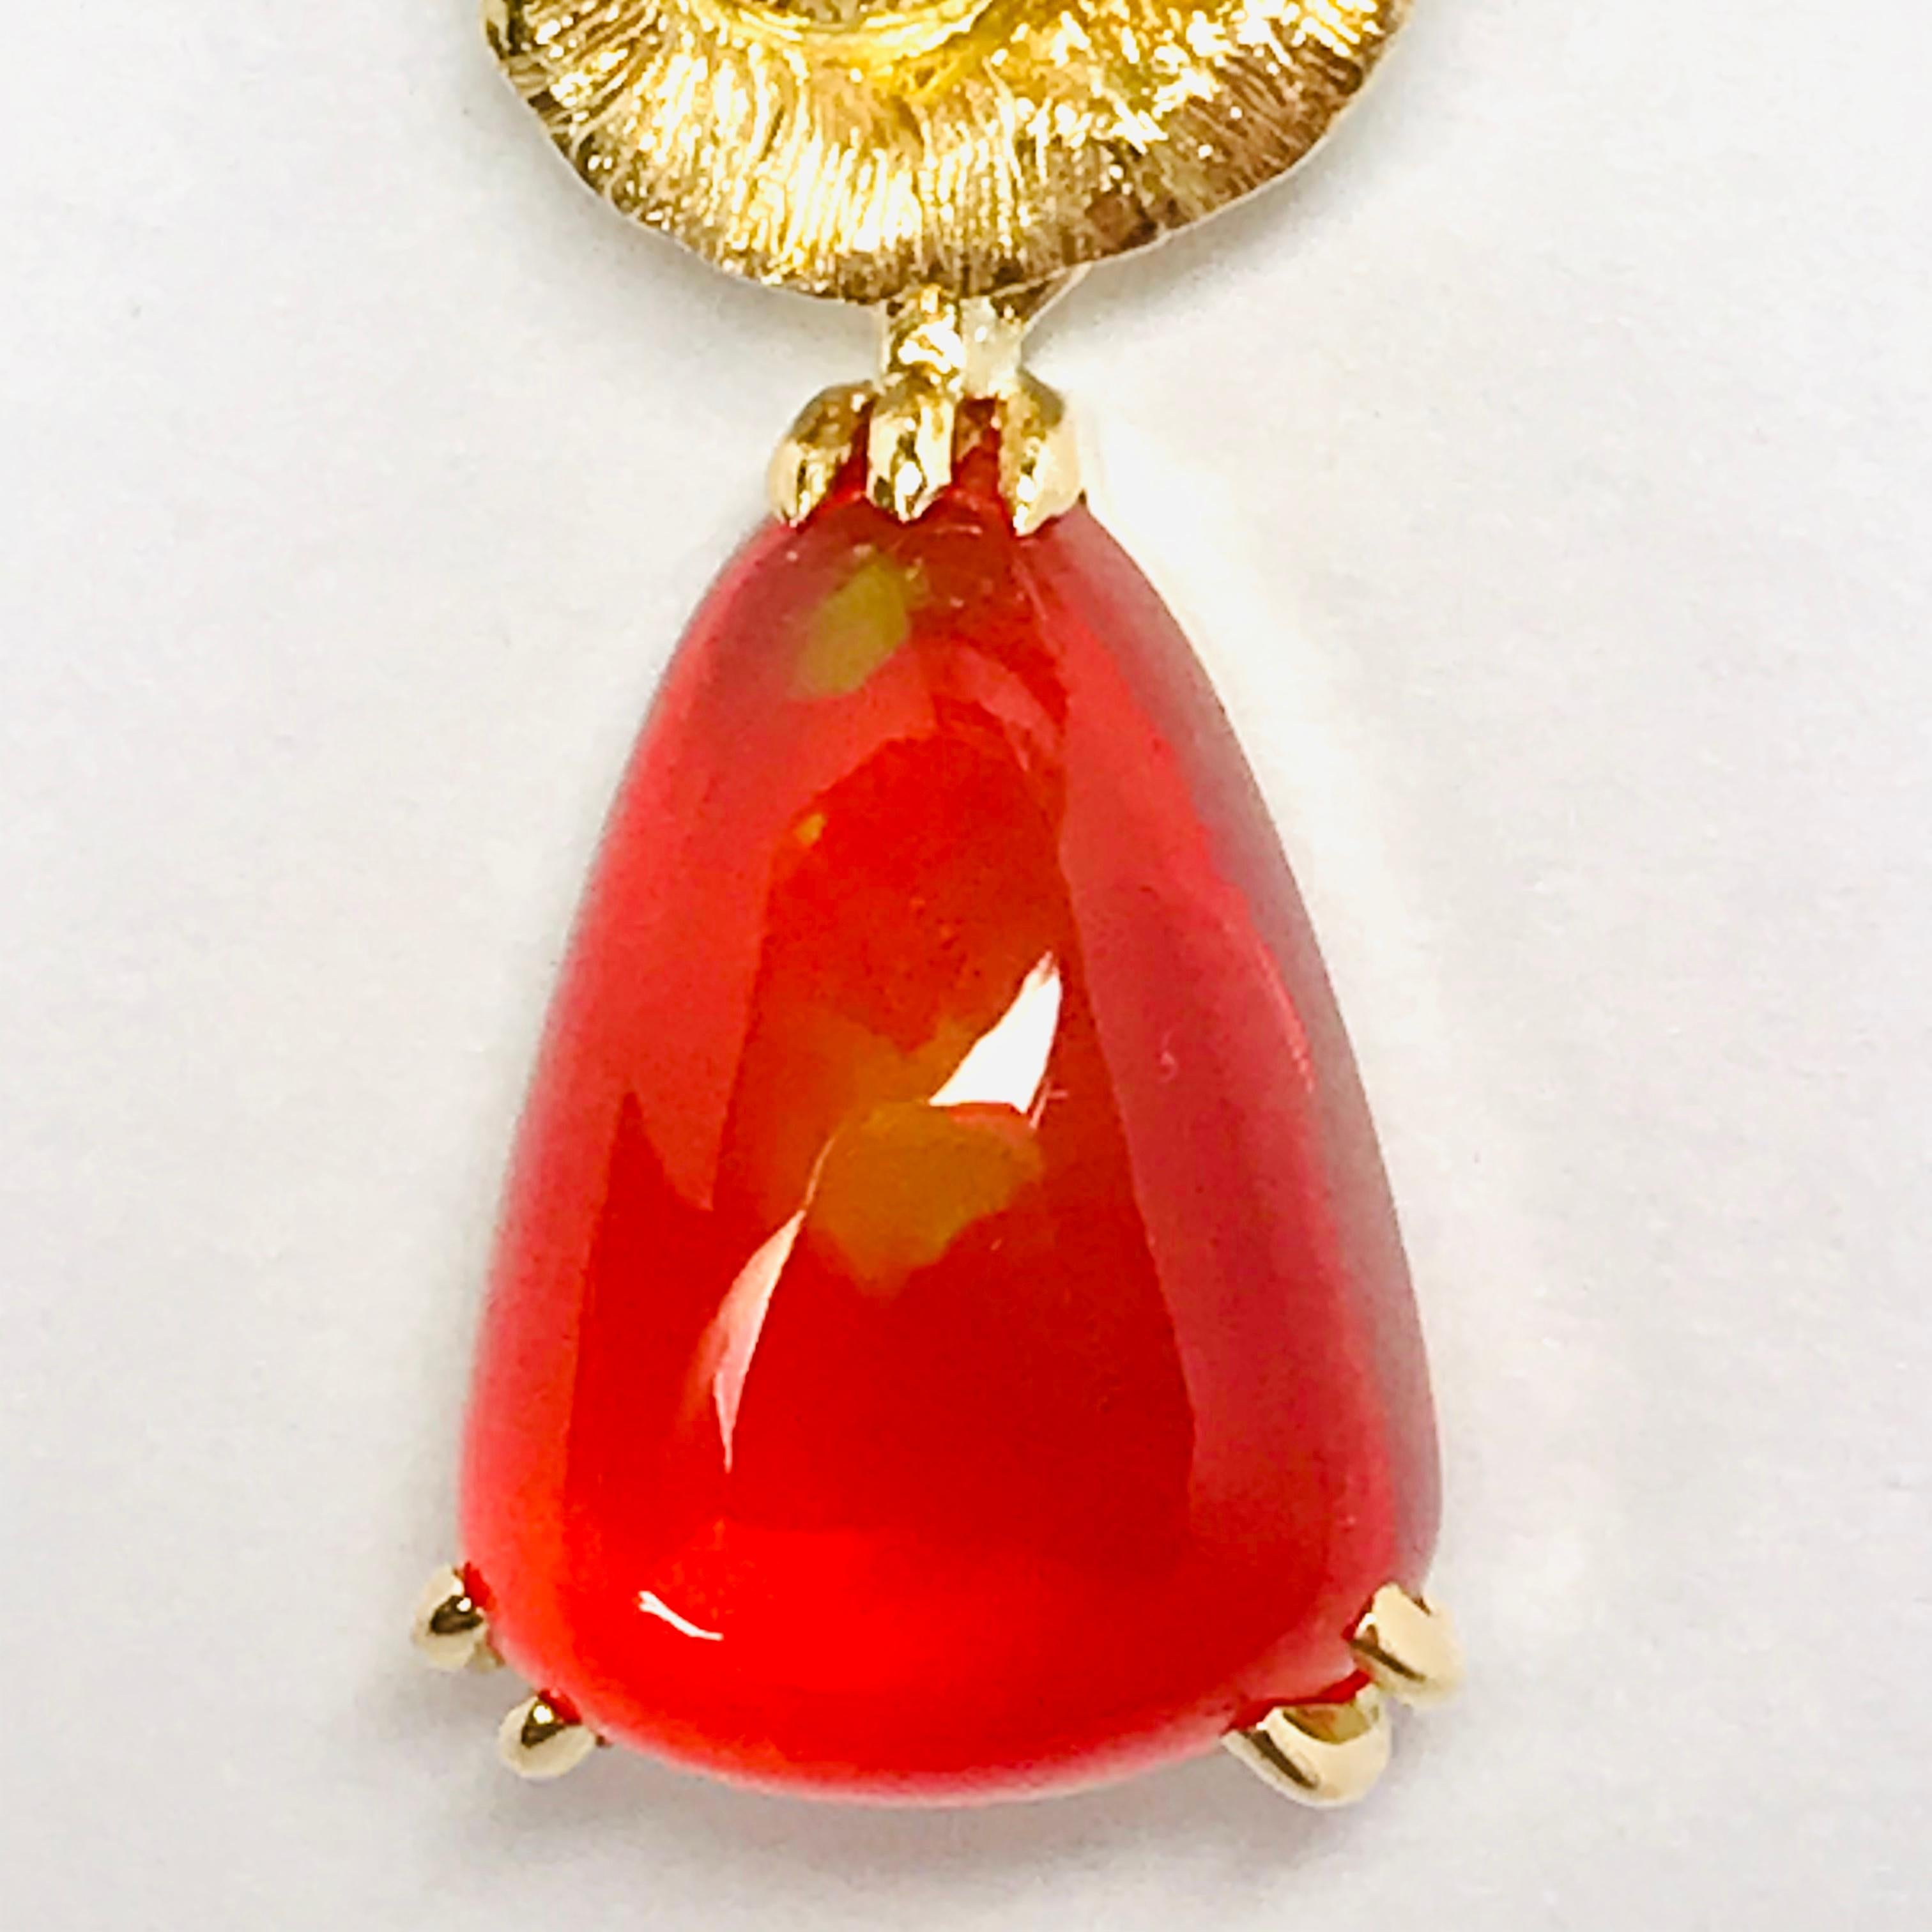 Matsuzaki K18 Gold Platinum Rose Flower 3.02 Carat Fire Opal Pendant Necklace For Sale 6